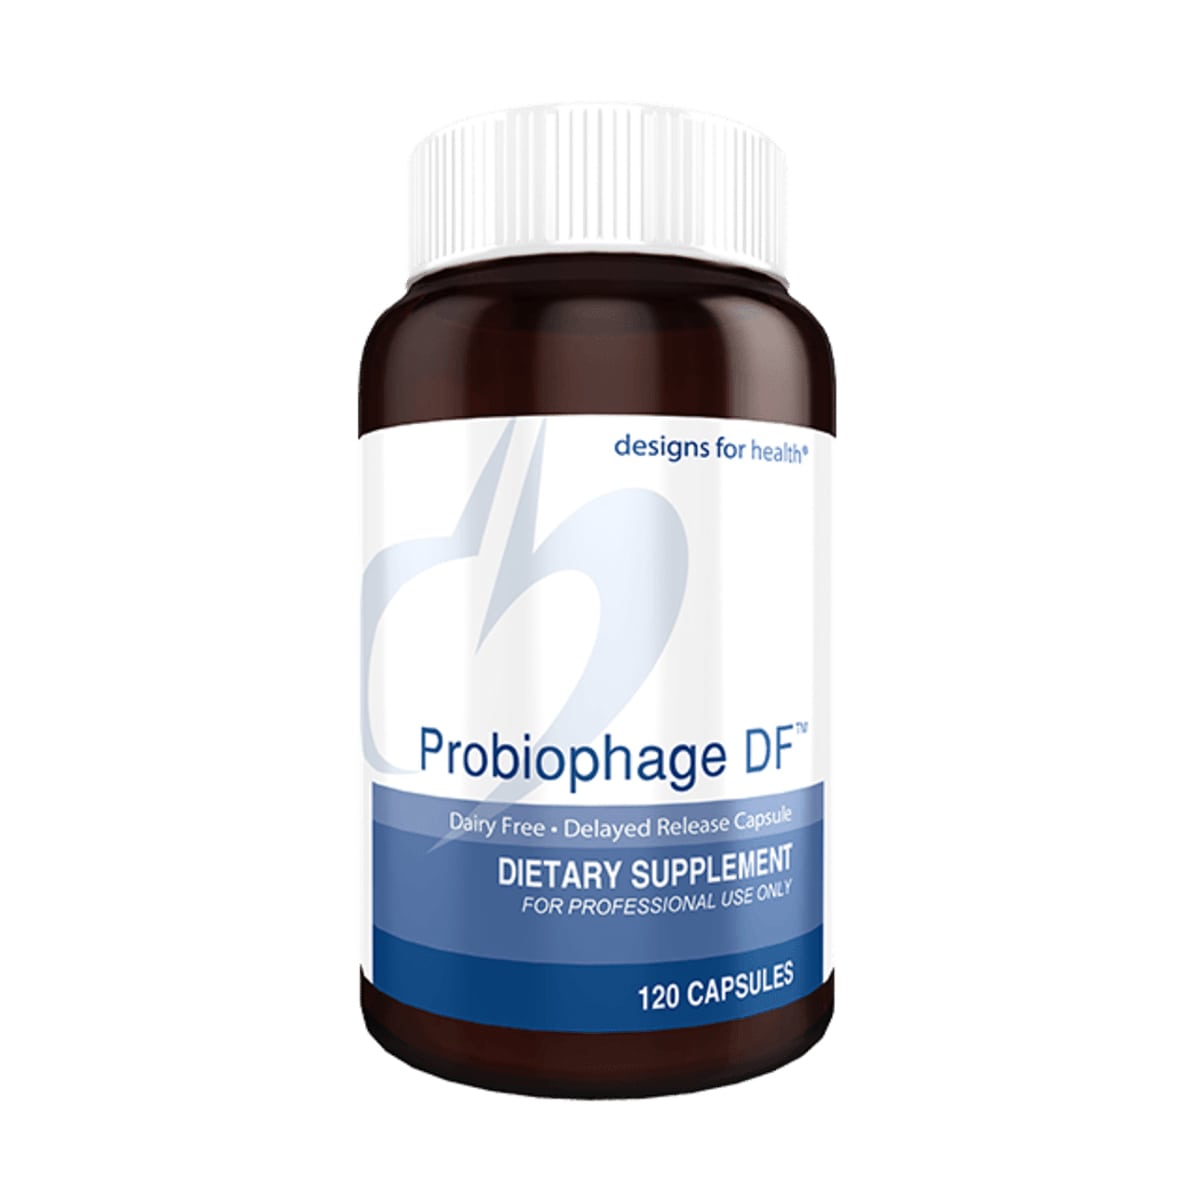 probiophage